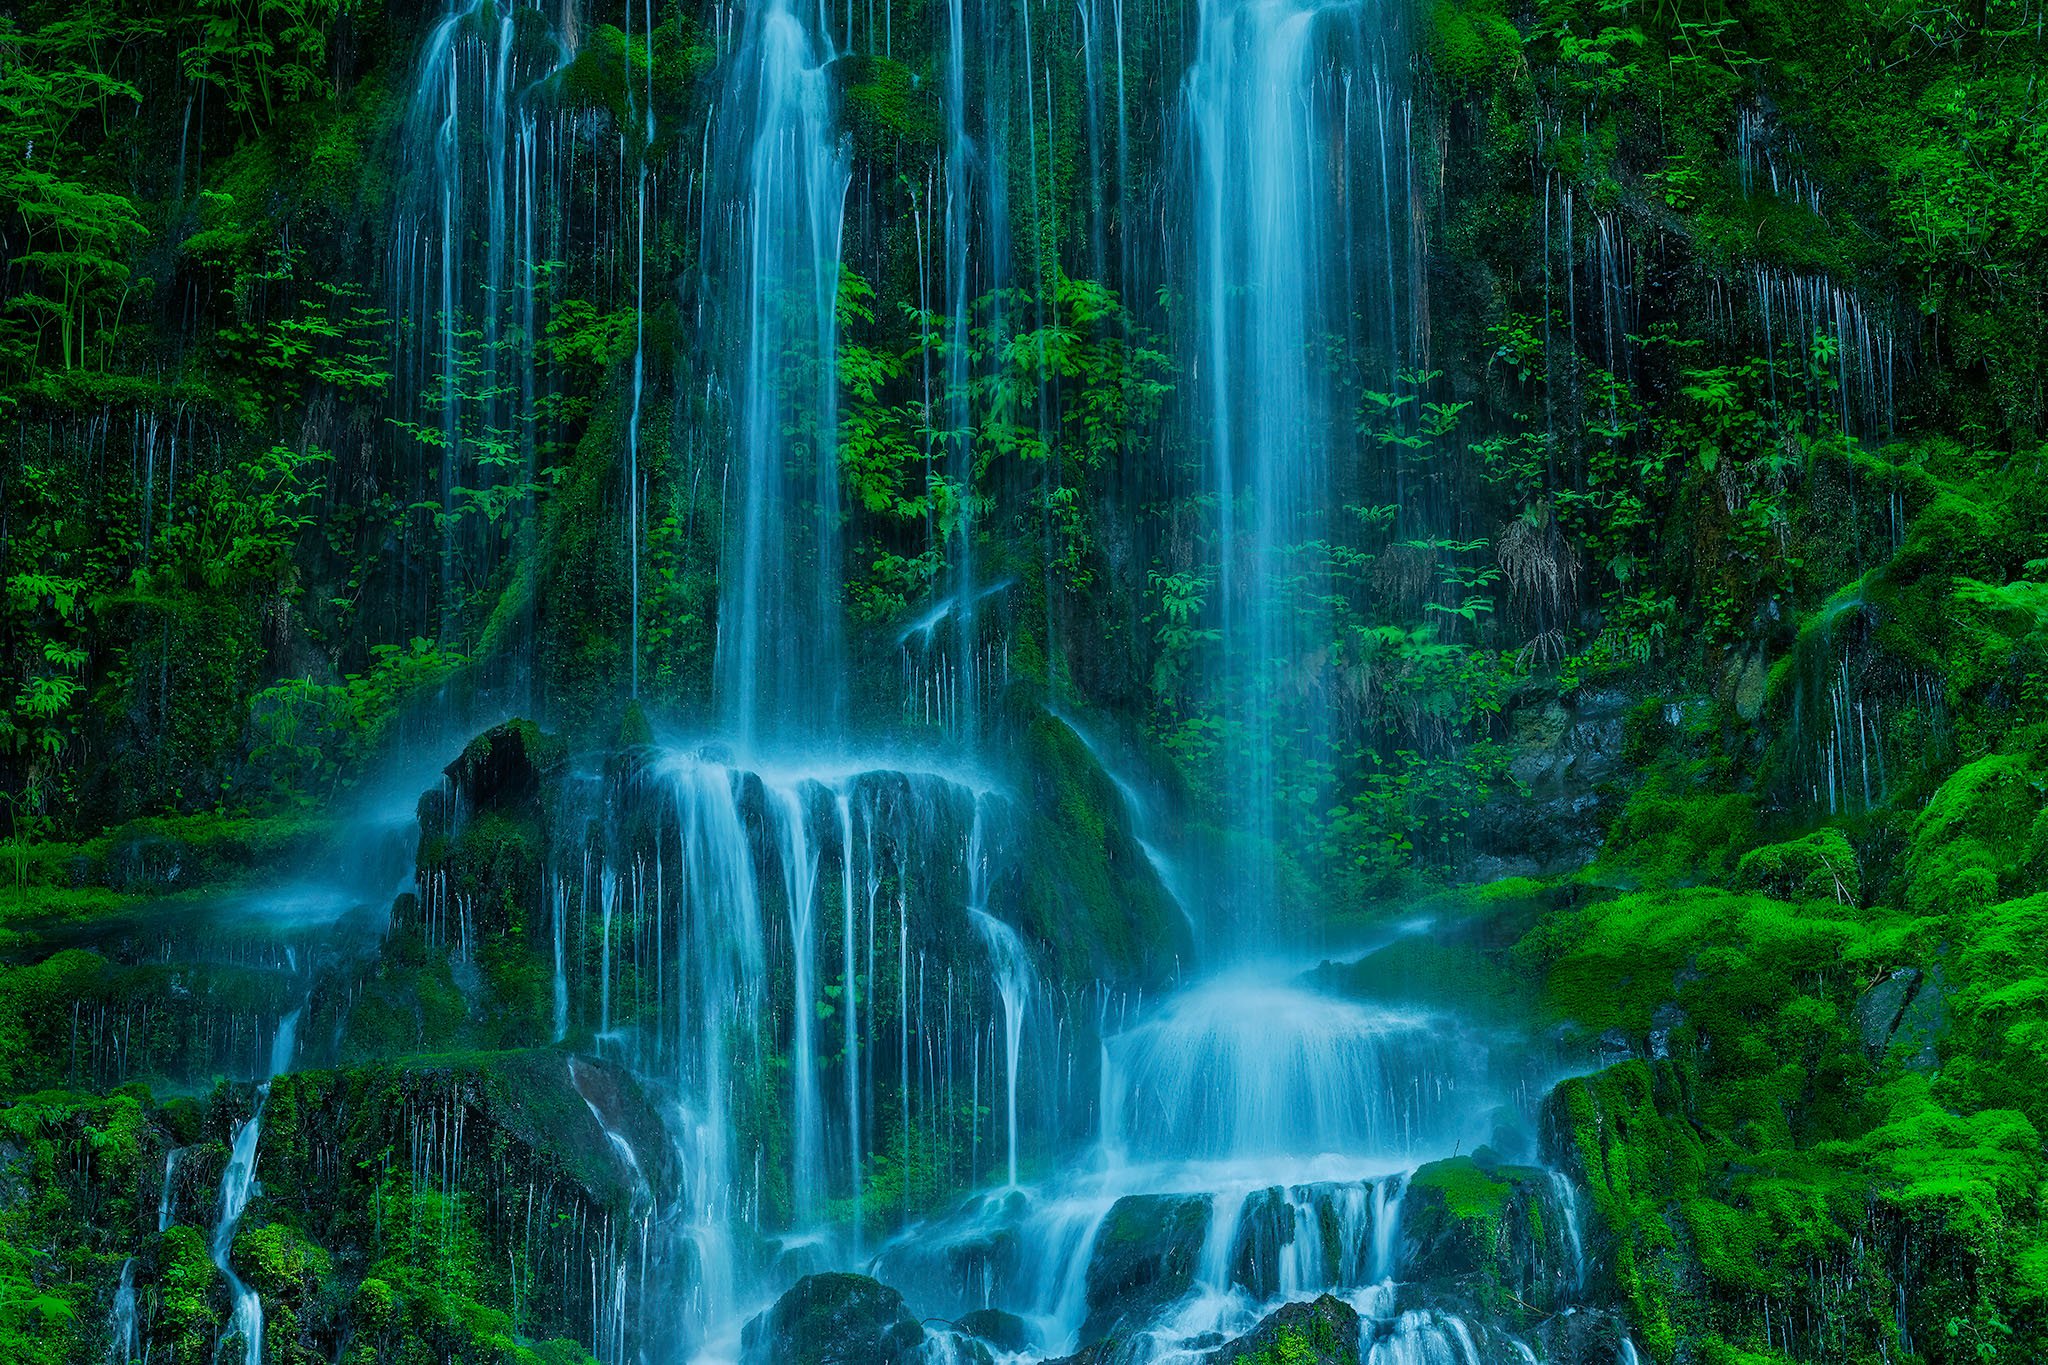 ws_wt_olympics_Quinault Waterfall edit web copy.jpg